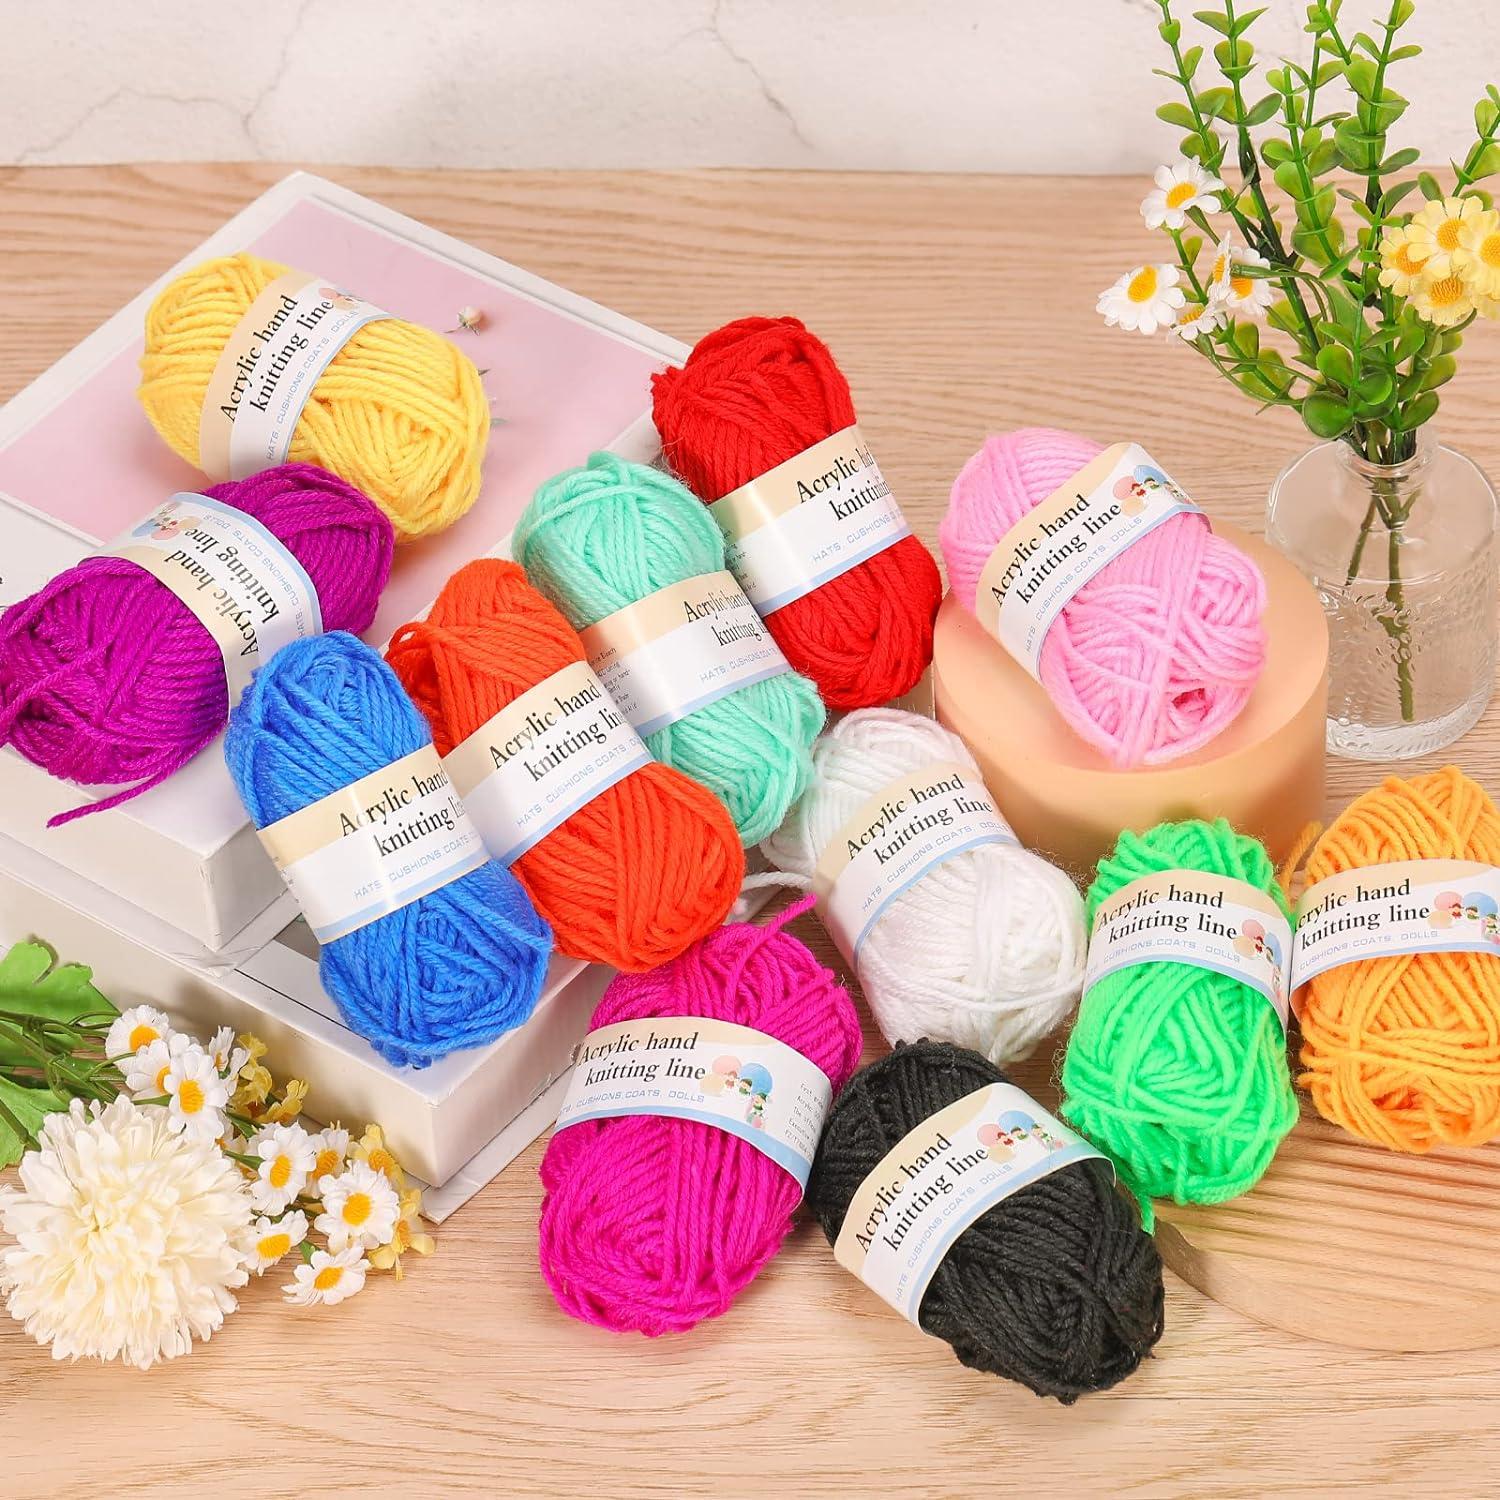 XSEINO Crochet Kit with Crochet Hooks Yarn Set - Premium Bundle Includes 40  Colors Crochet Yarn Balls, Crochet Kit, Accessories Kit, Crochet Bag and